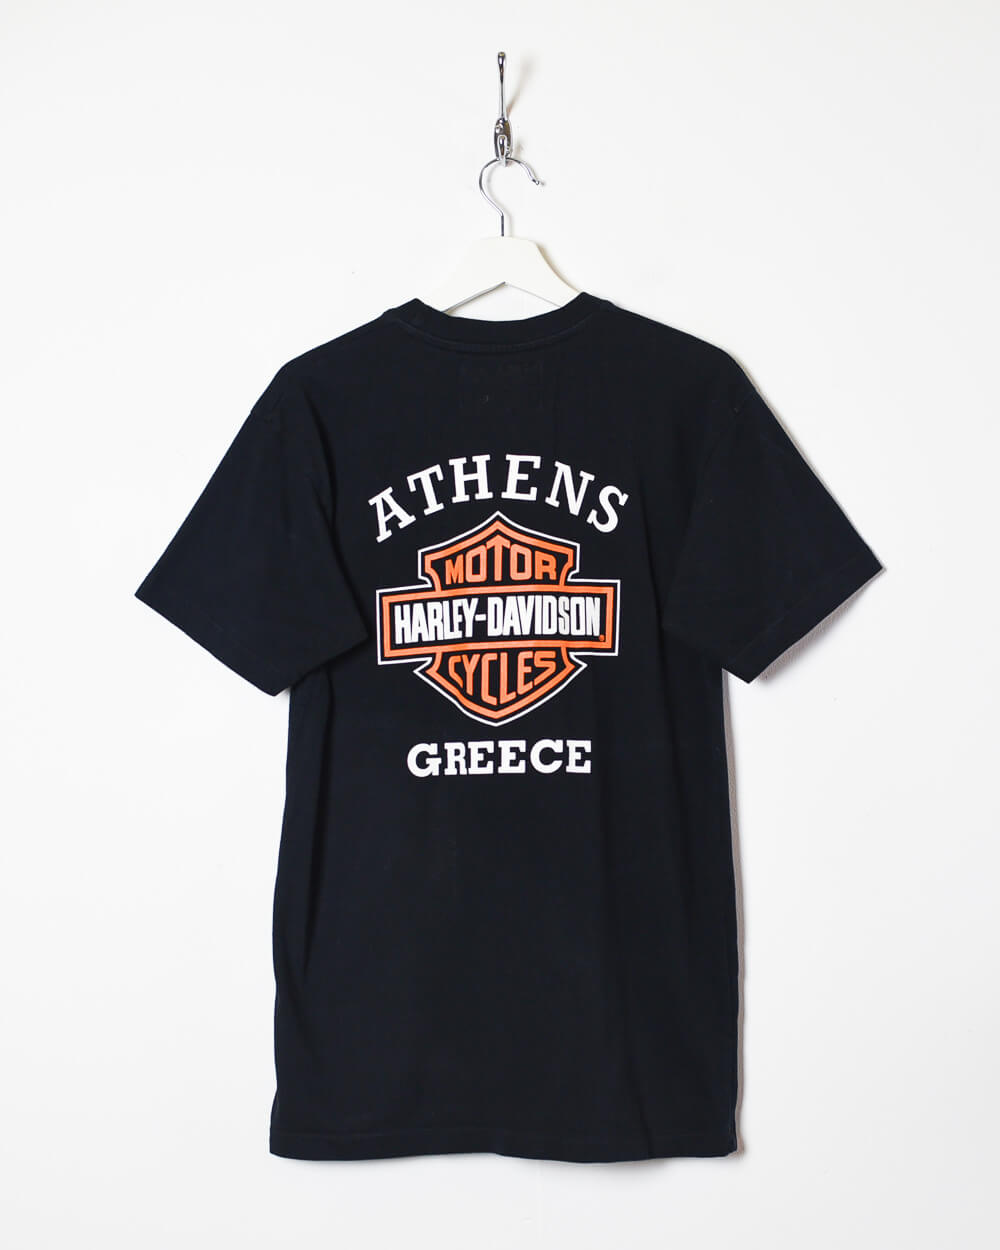 Black Harley Davidson Motorcycles Athens Greece T-Shirt - Medium